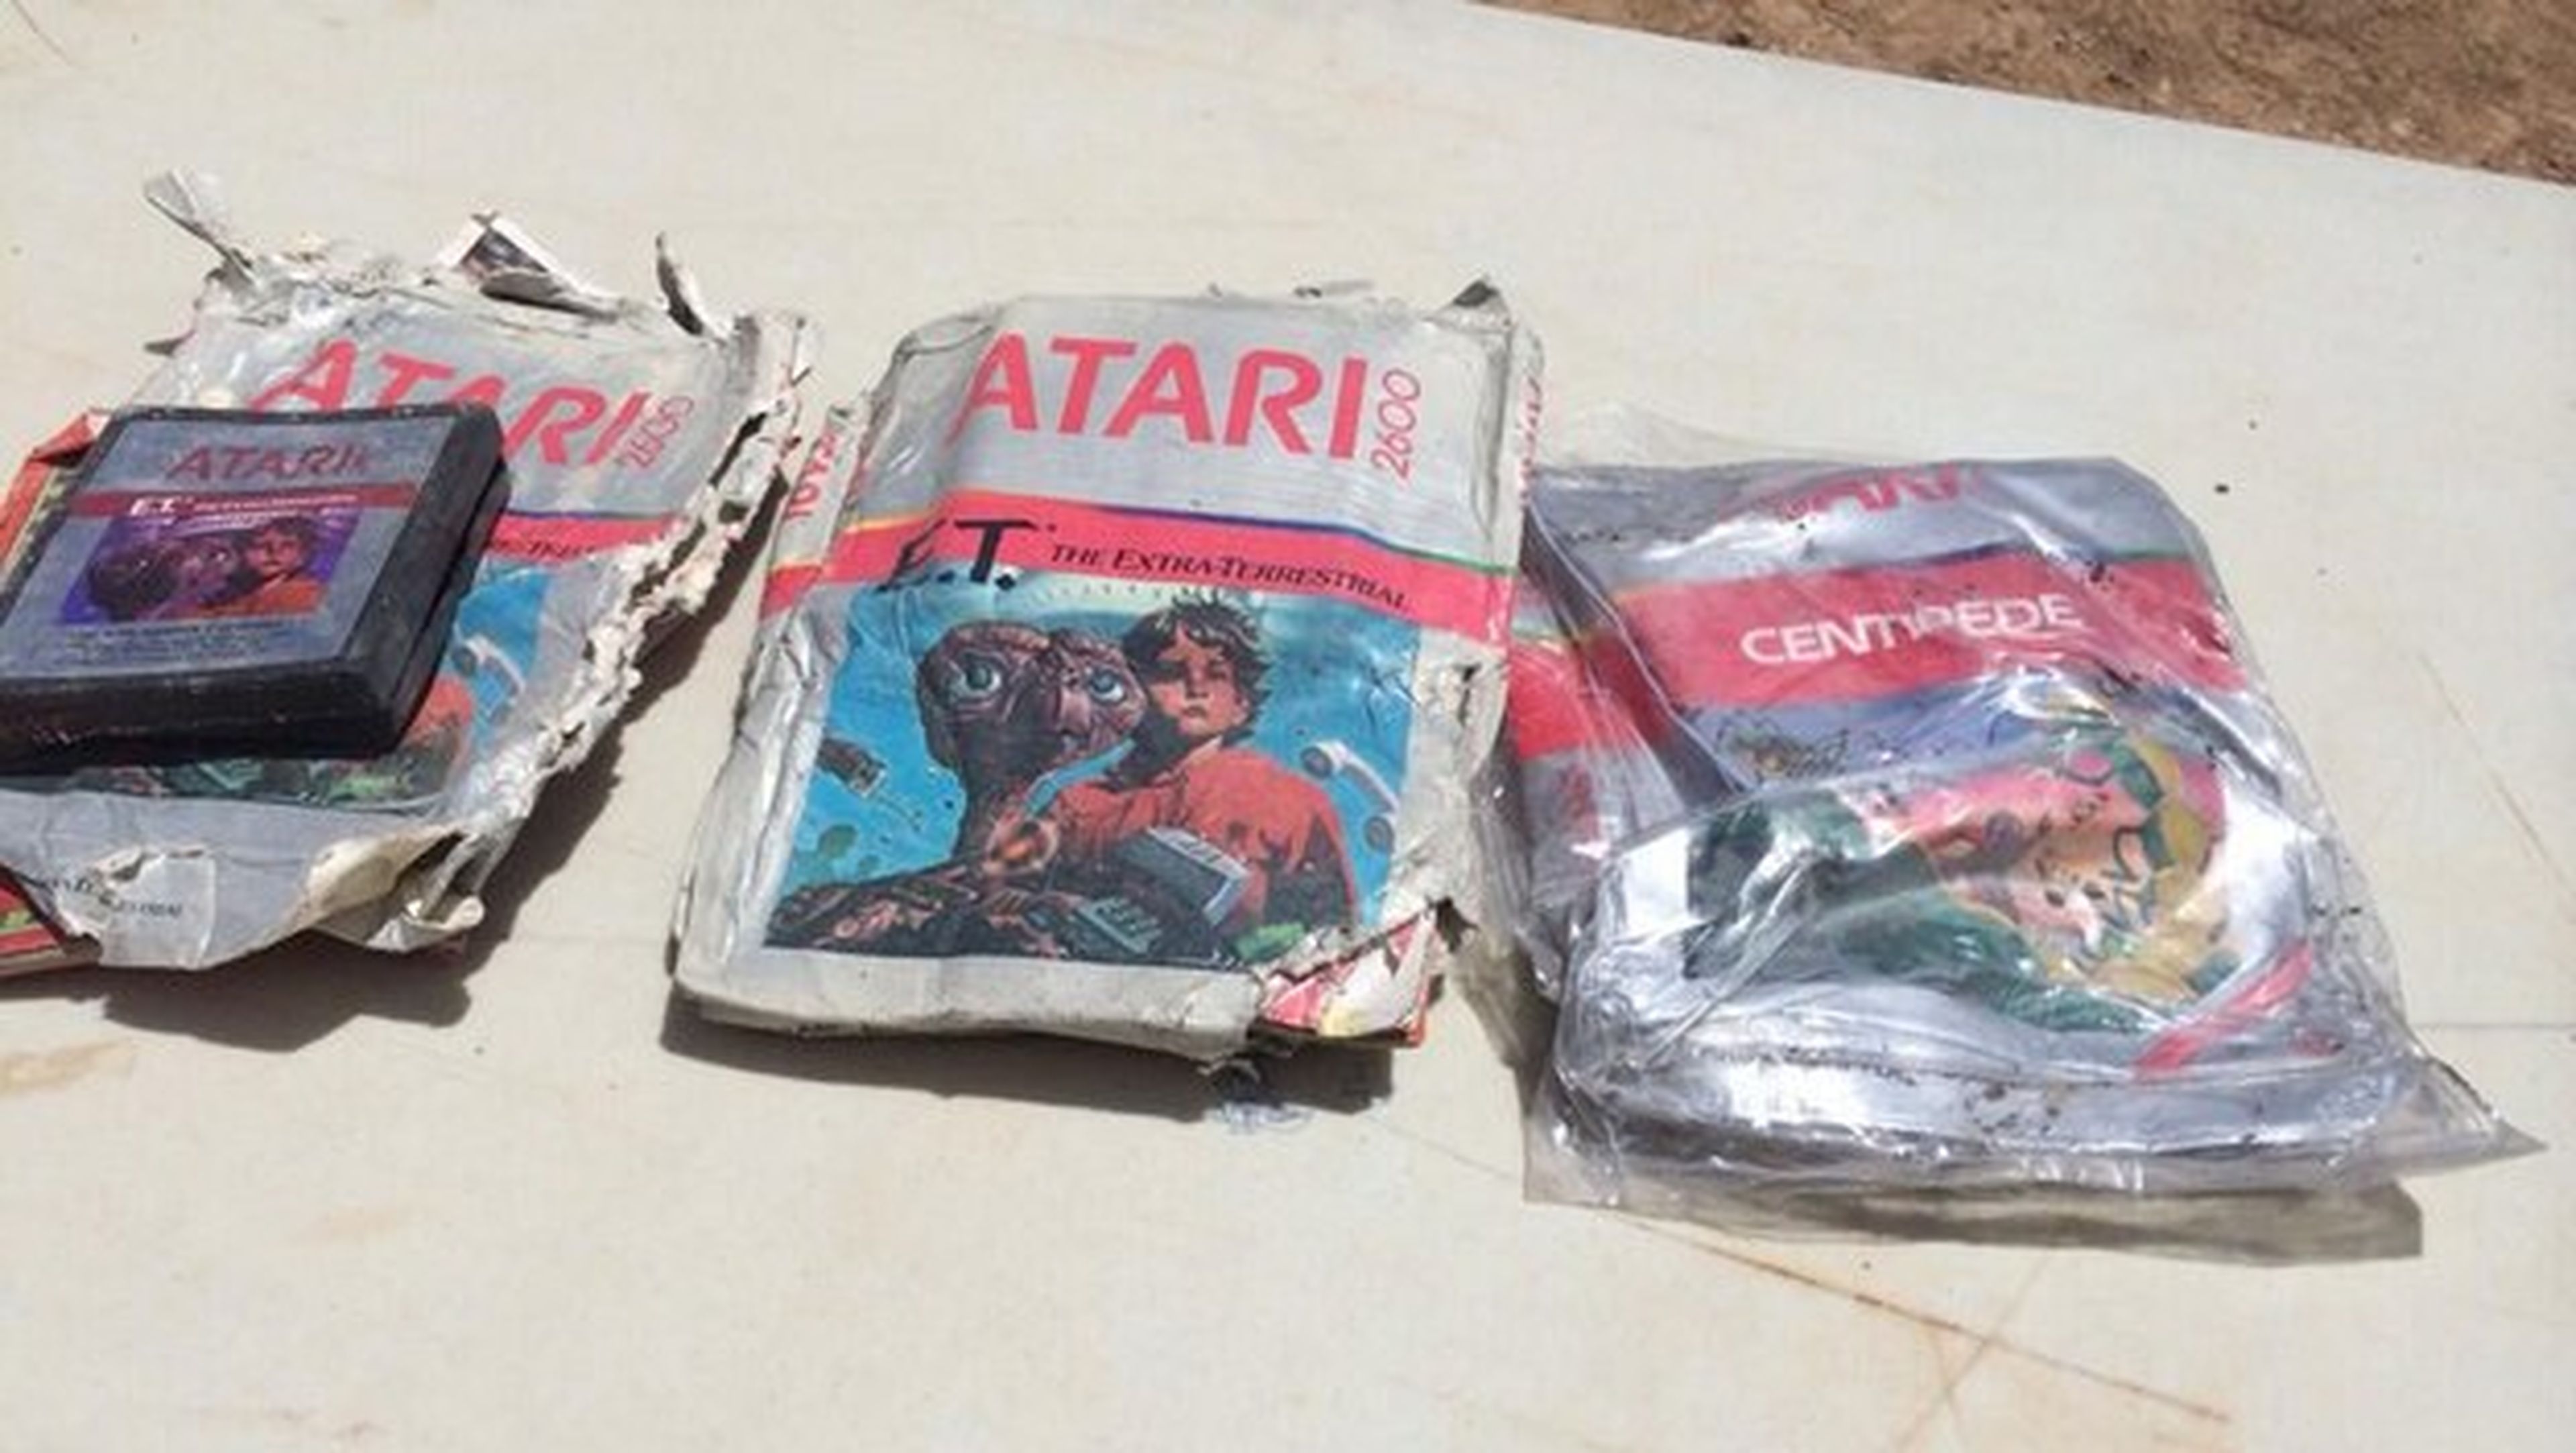 Documental Atari: Game Over